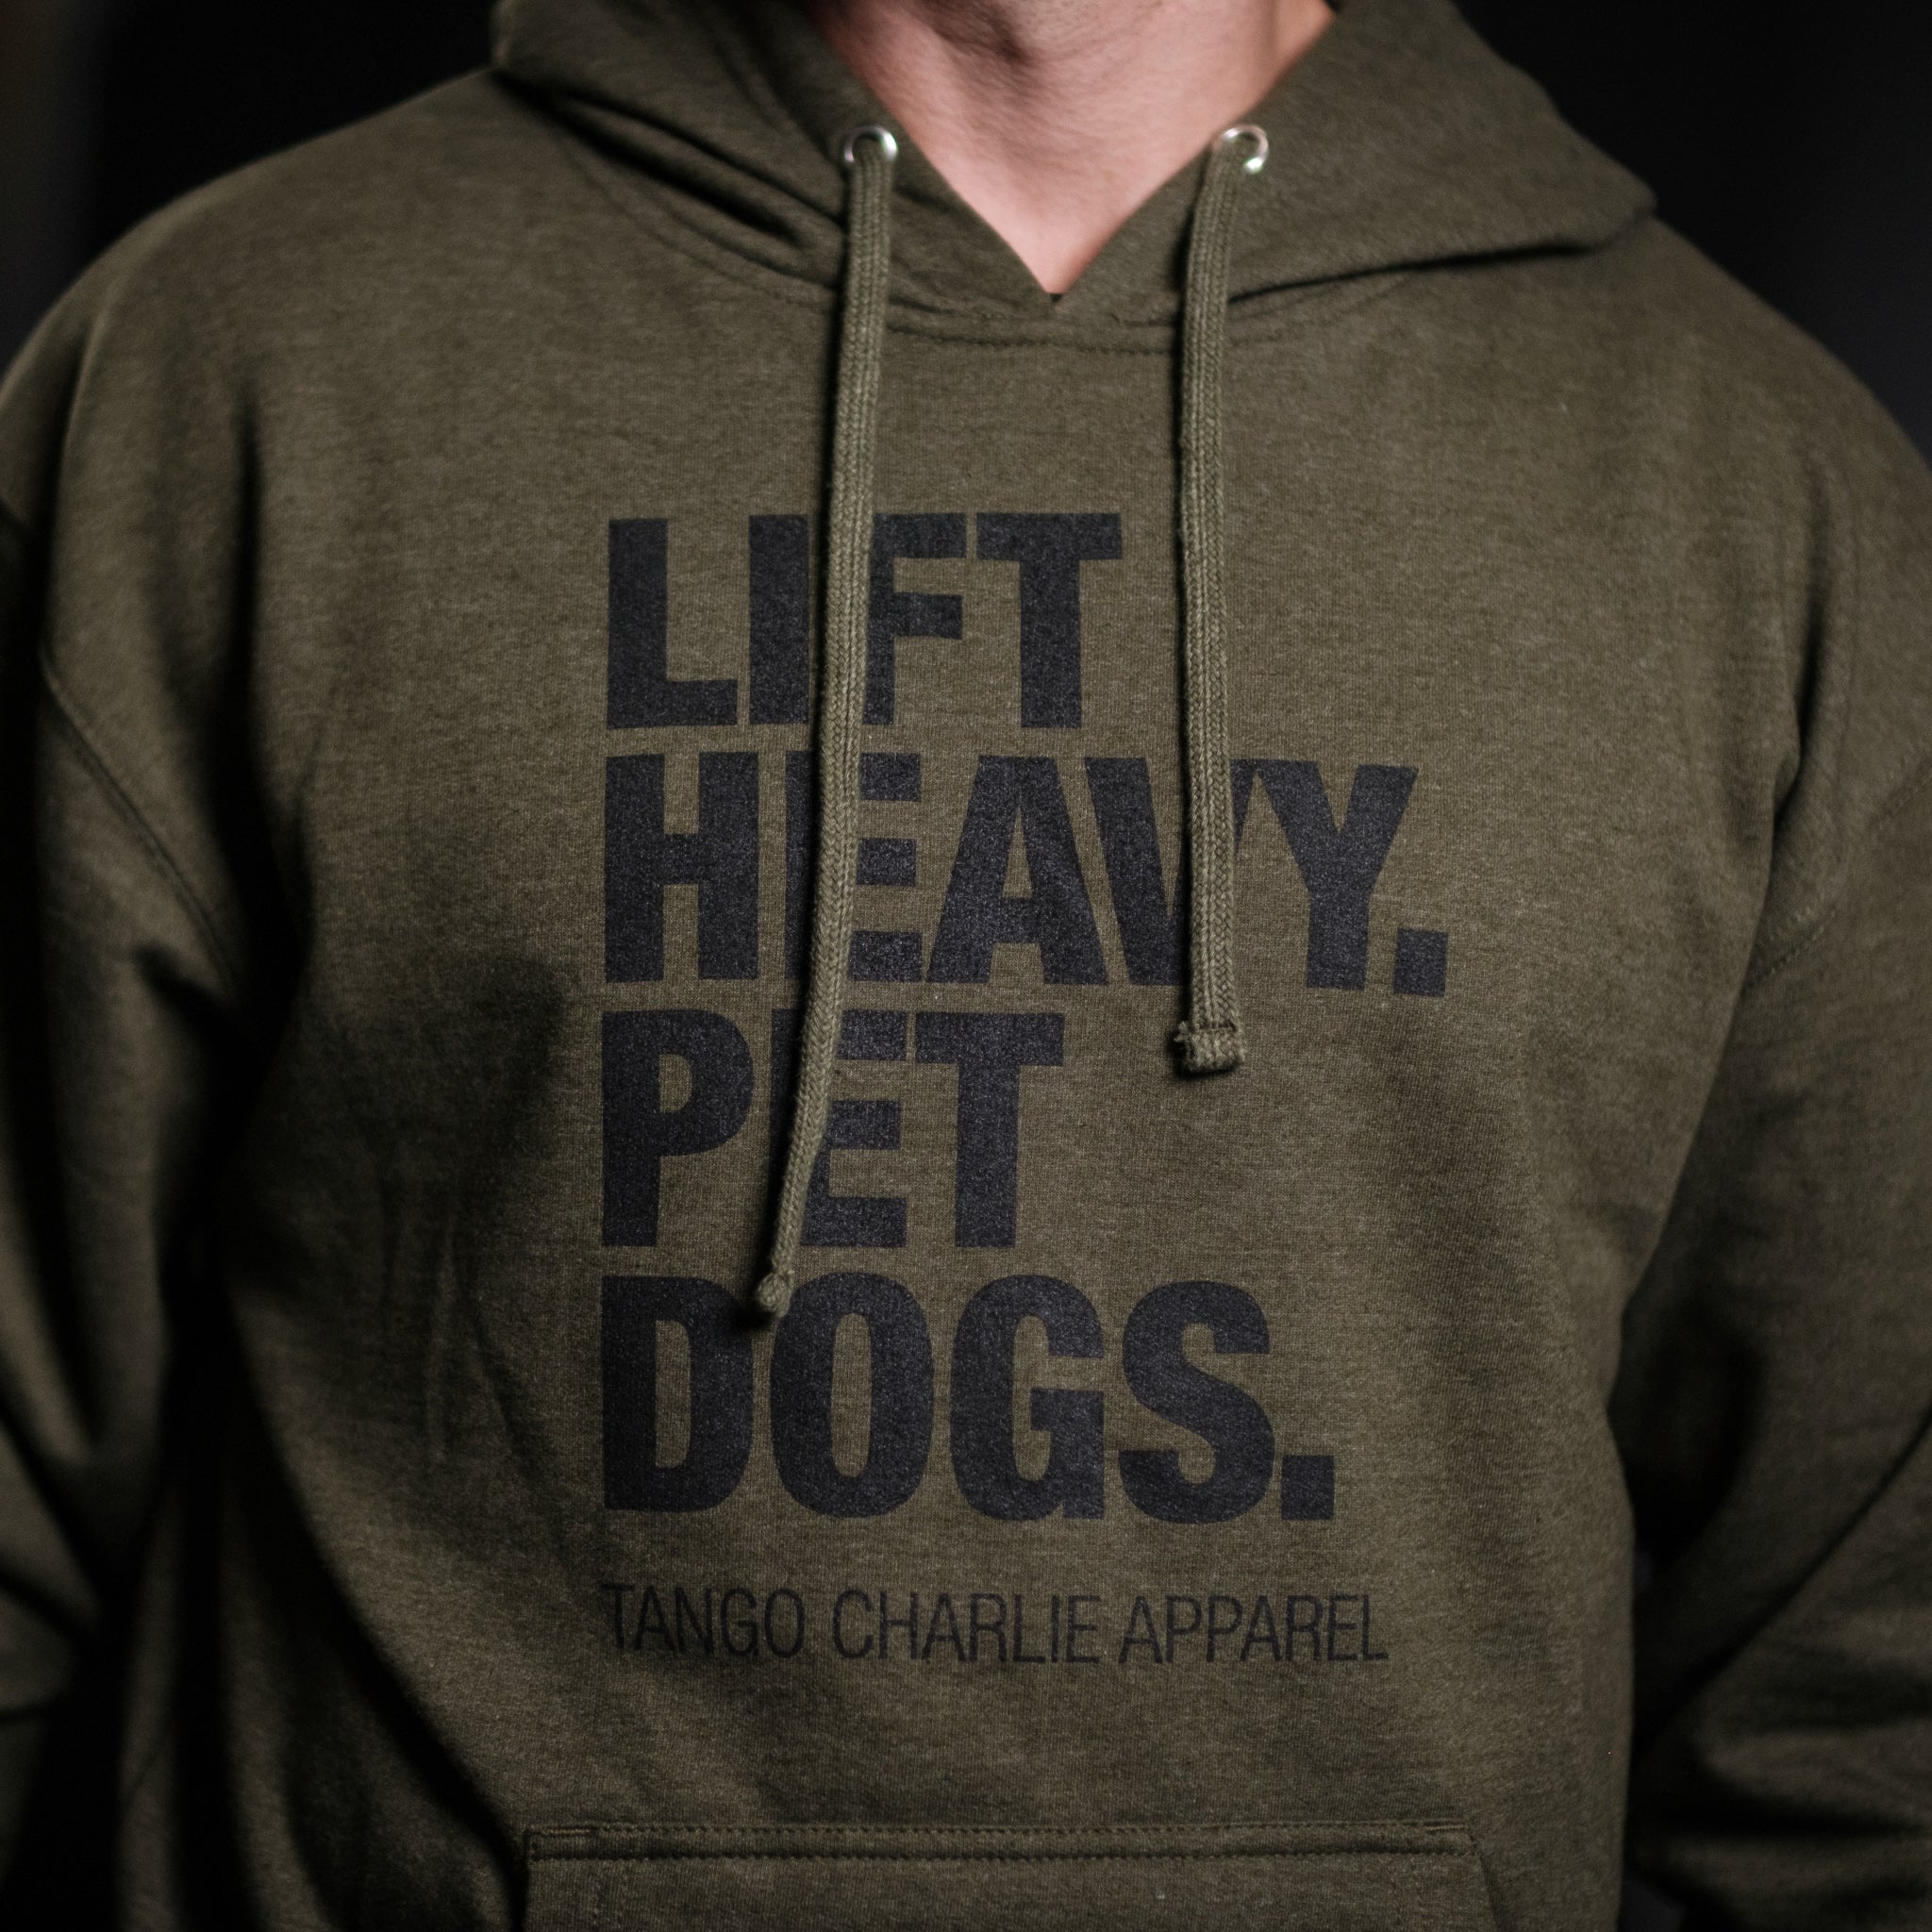 Lift Heavy. Pet Dogs. - Hoodie